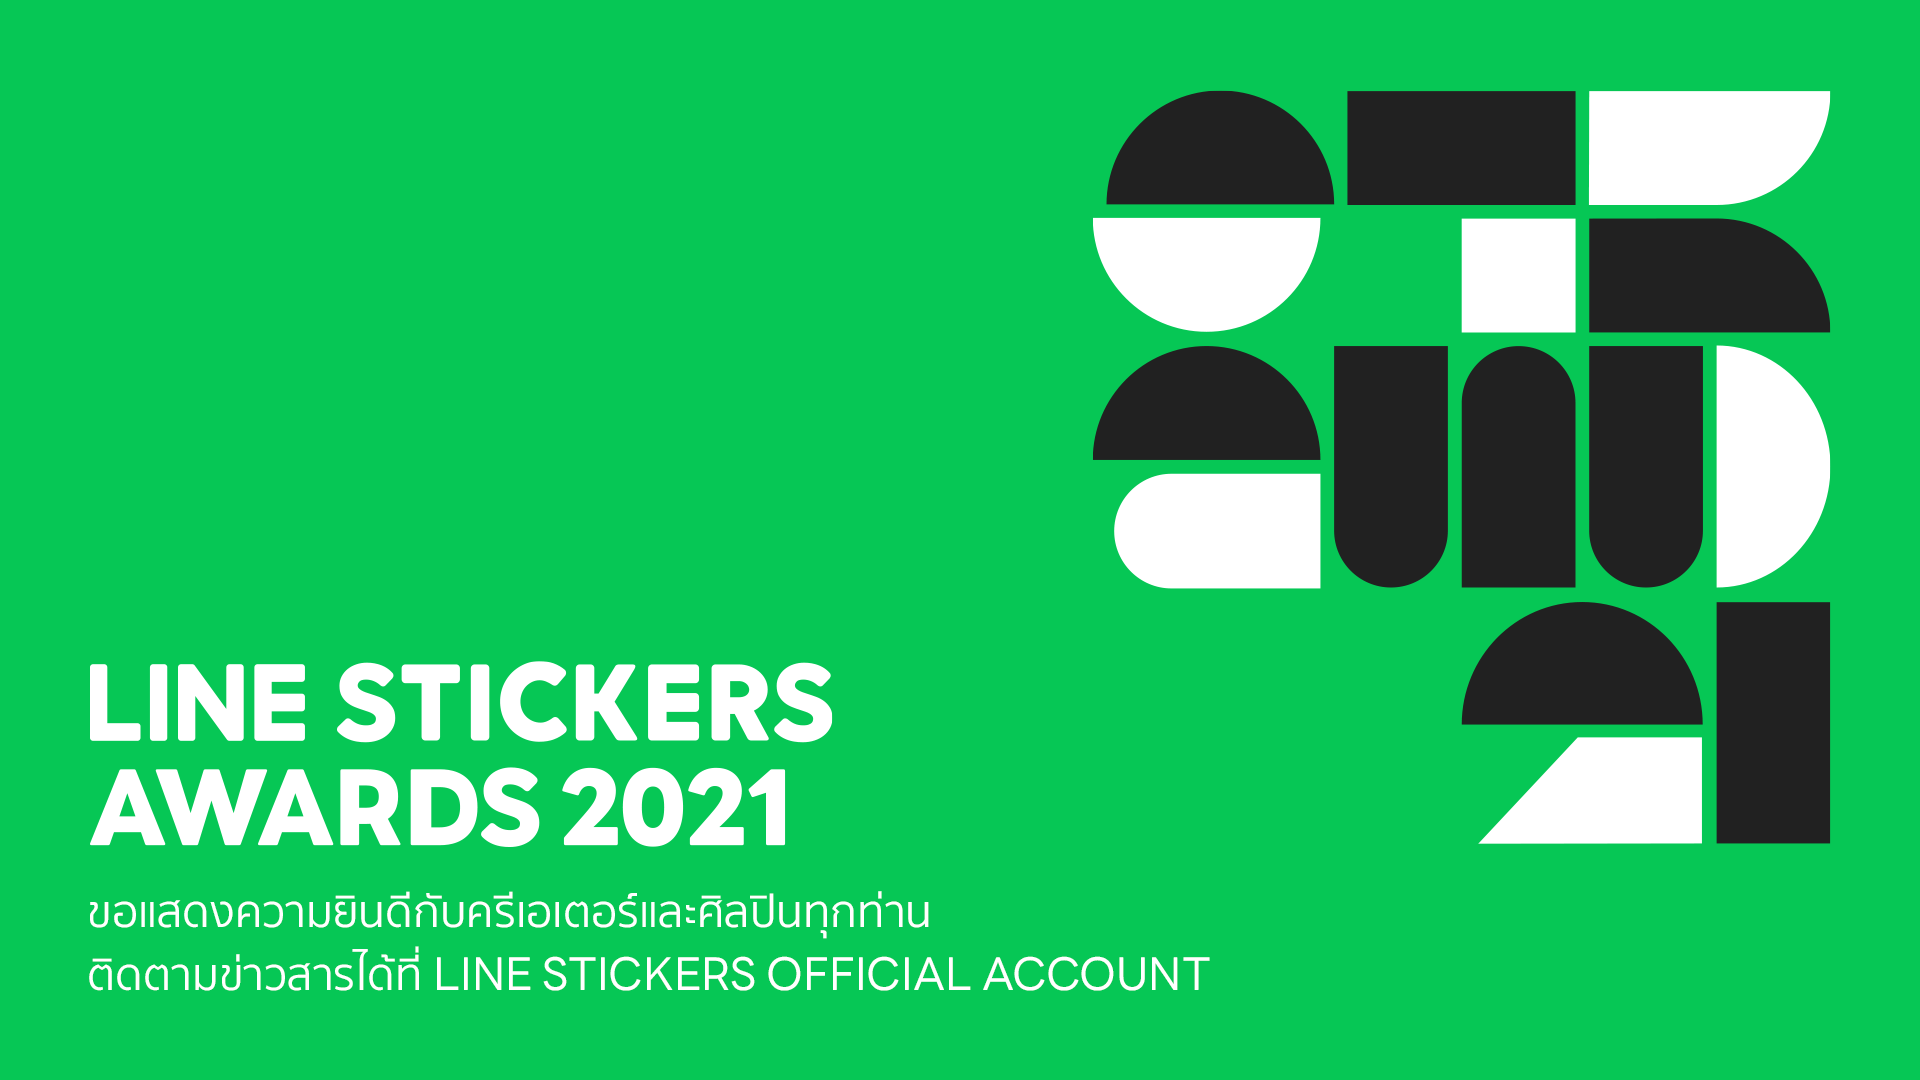 LINE จัดงาน LINE STICKERS AWARDS 2021 มอบรางวัลแก่สติกเกอร์สุดปังแห่งปี